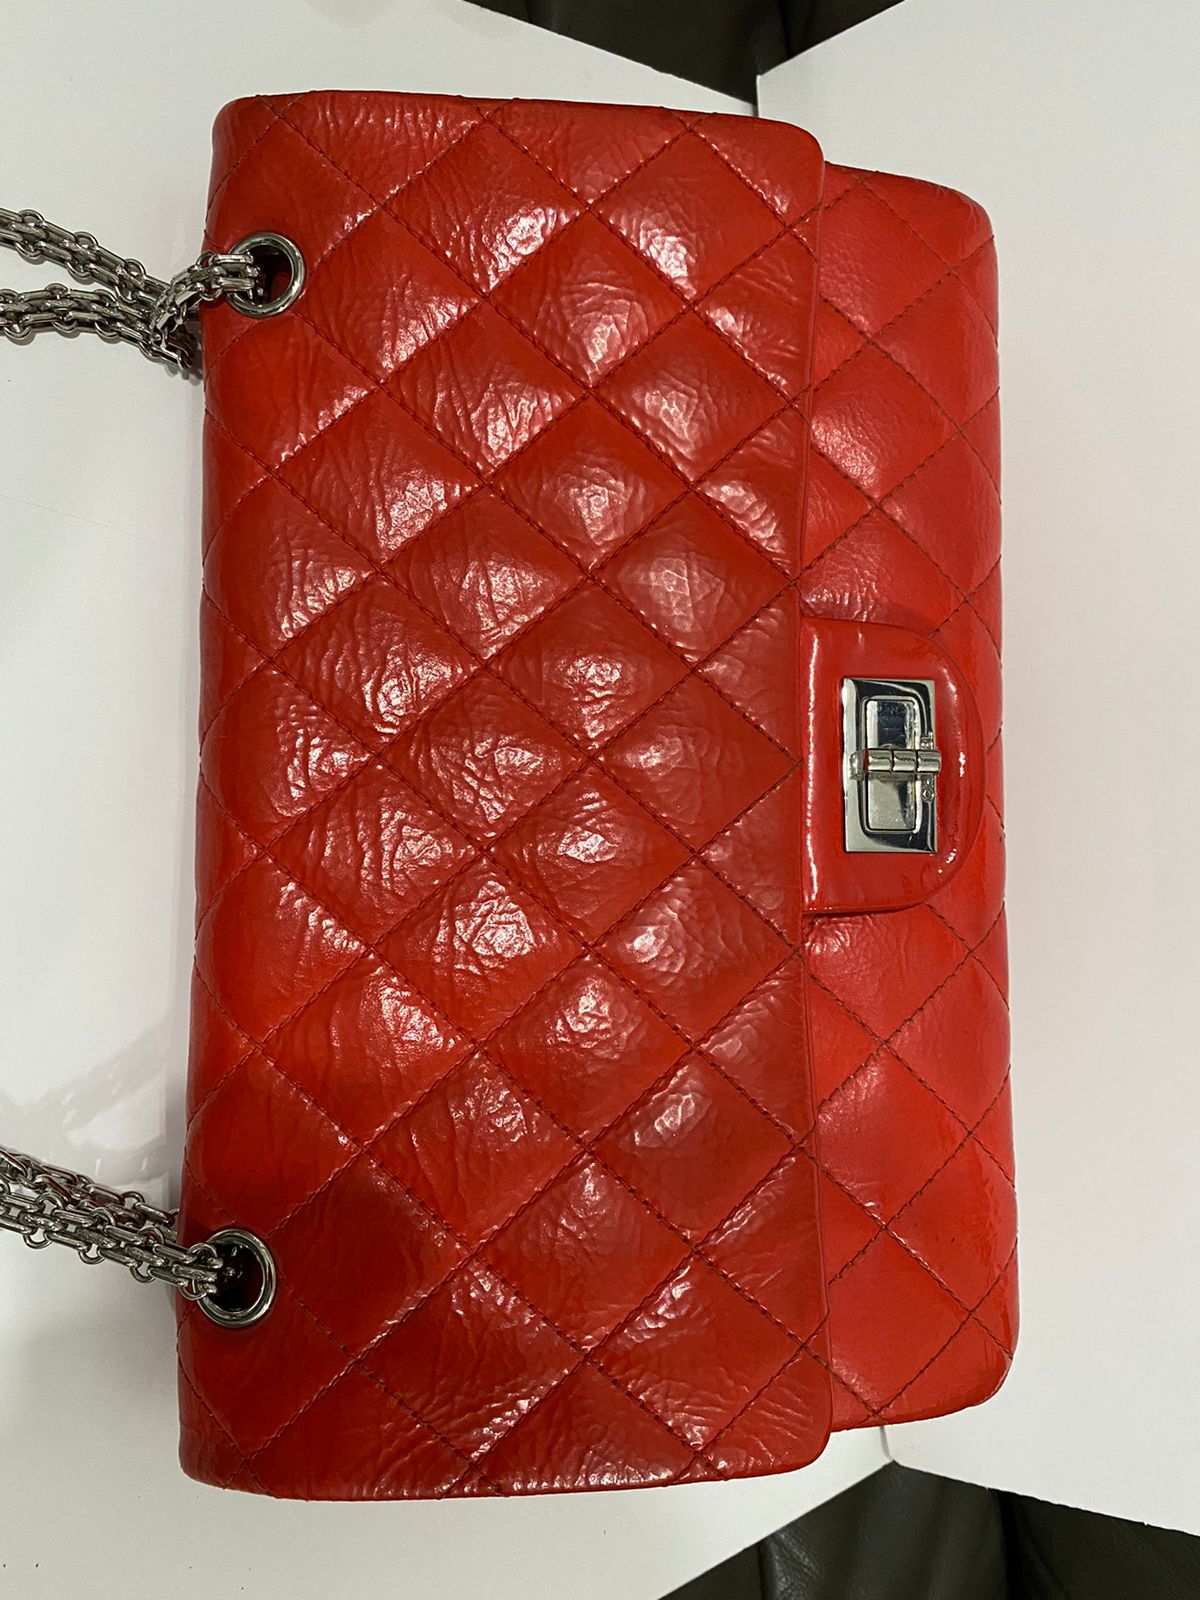 Chanel Reissue 227 Jumbo bag - The Luxury Flavor